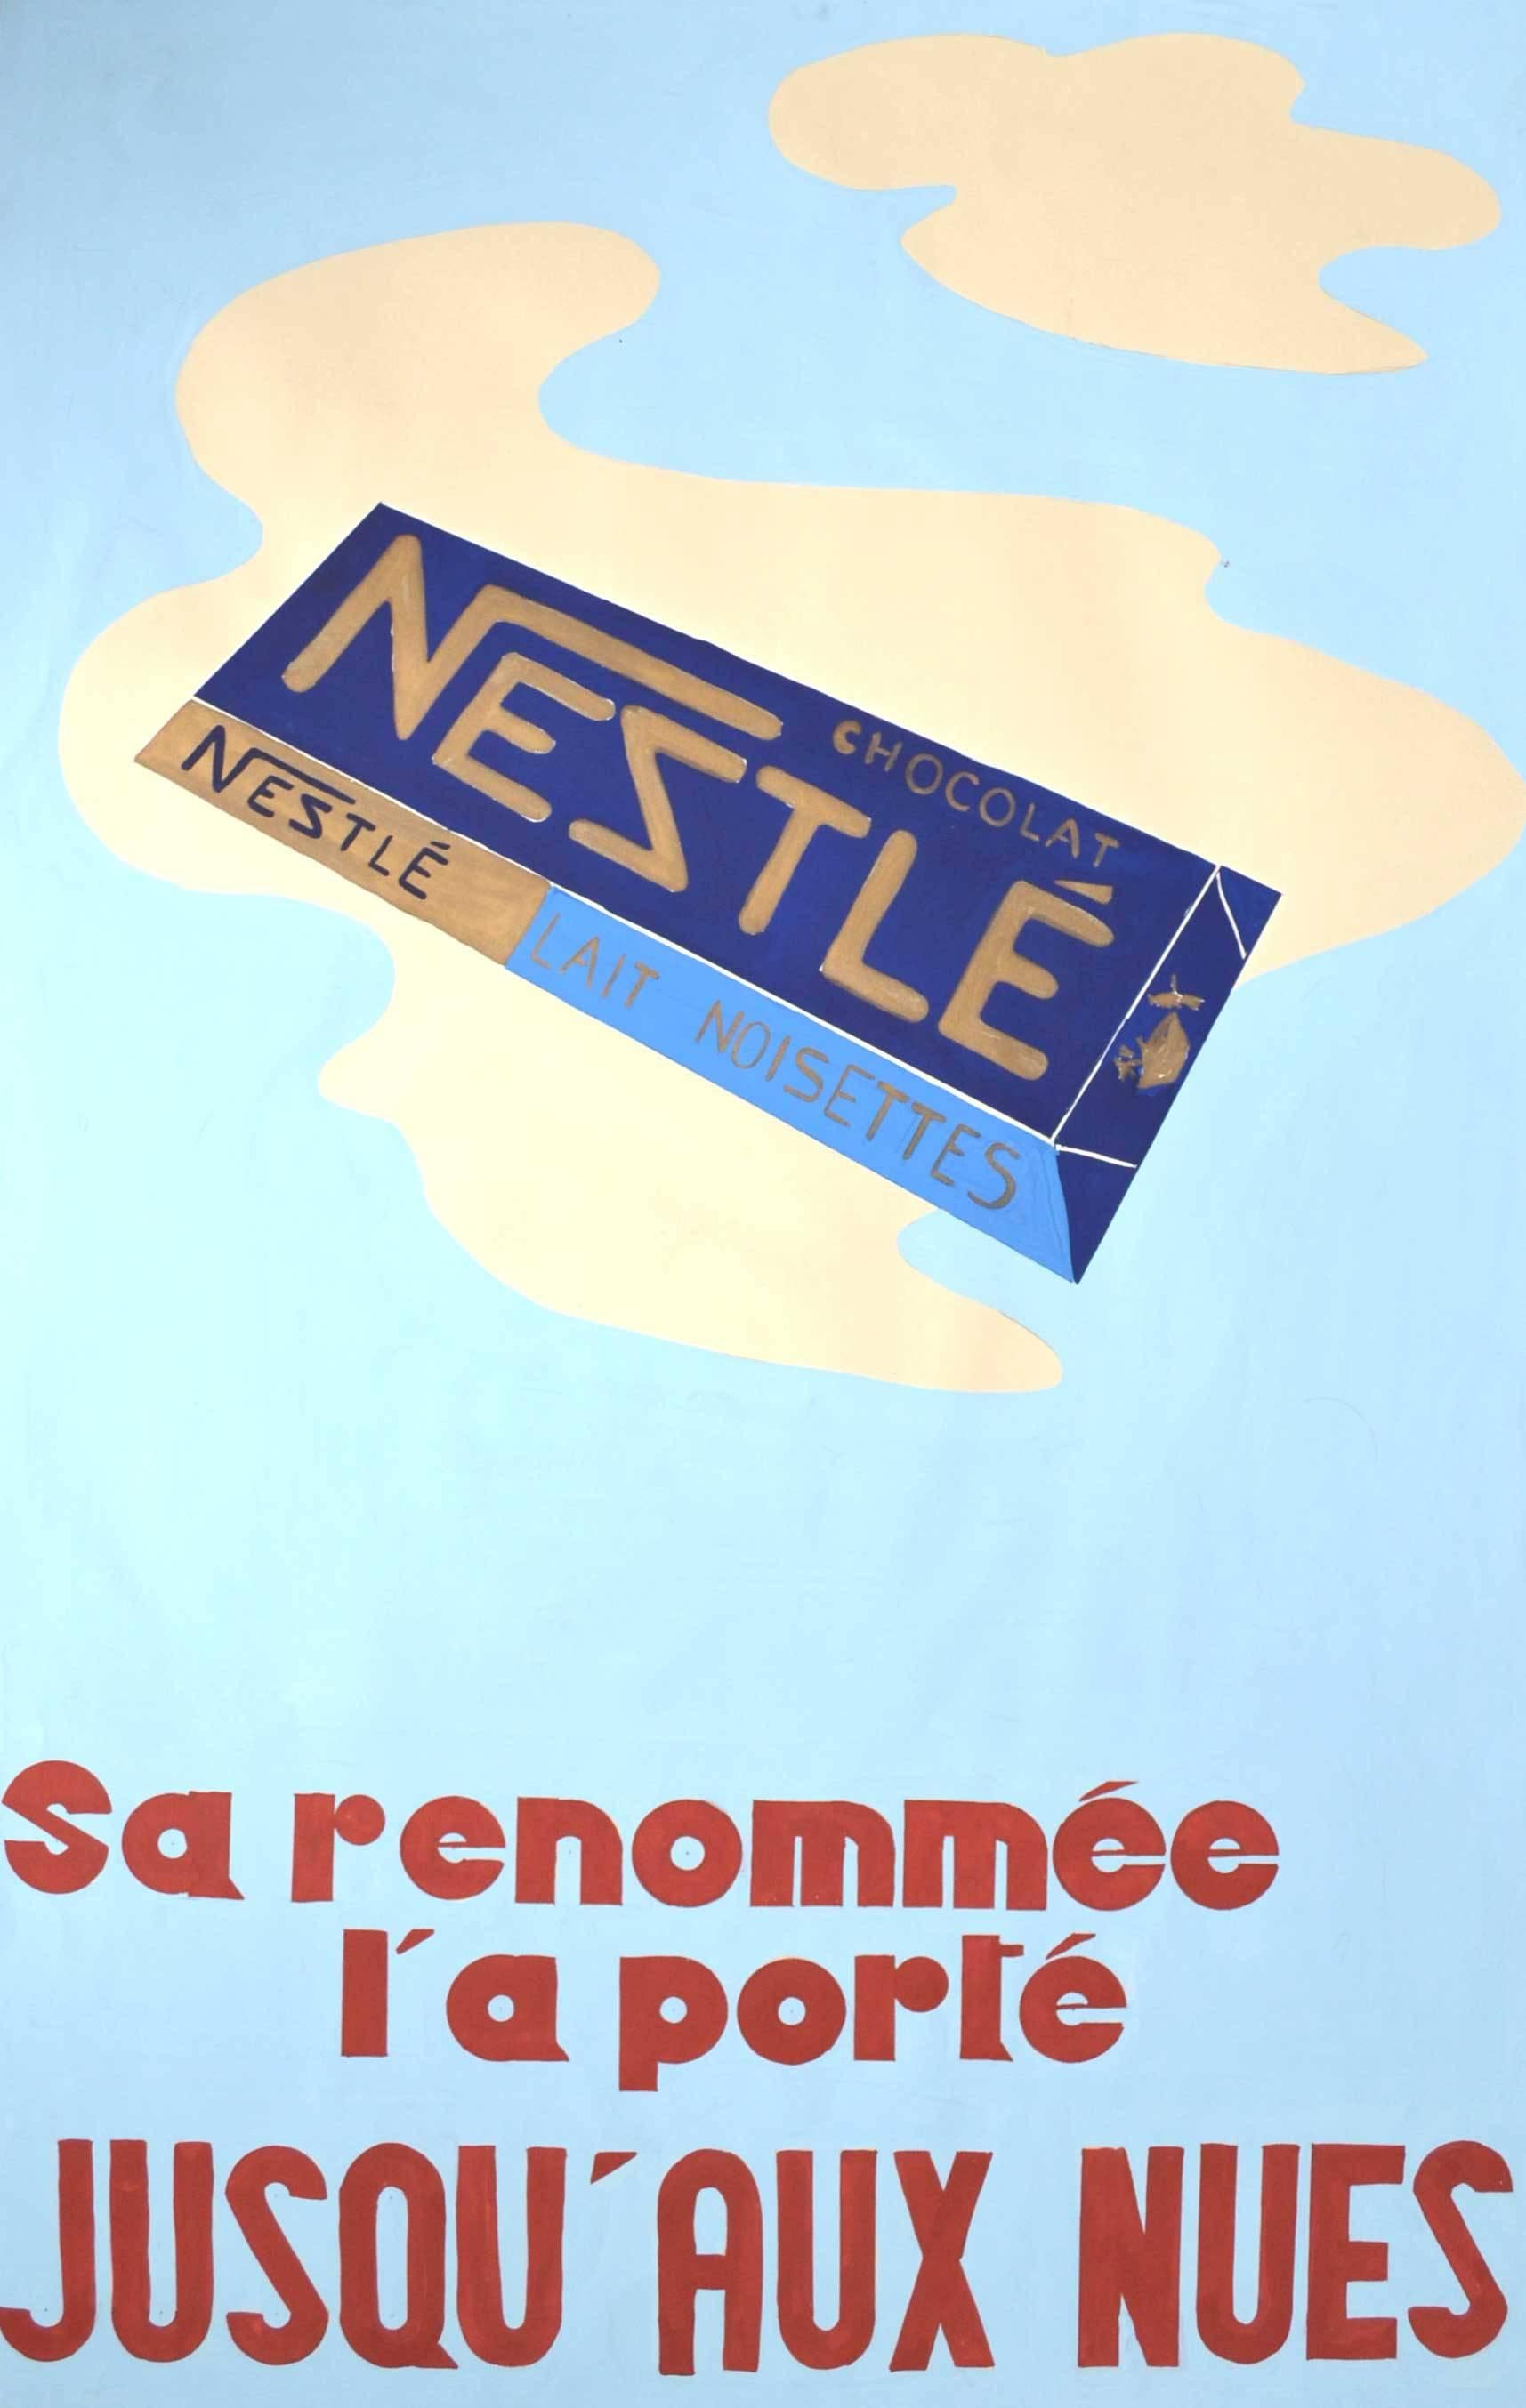 Nestlé - Original Artwork for Advertisement